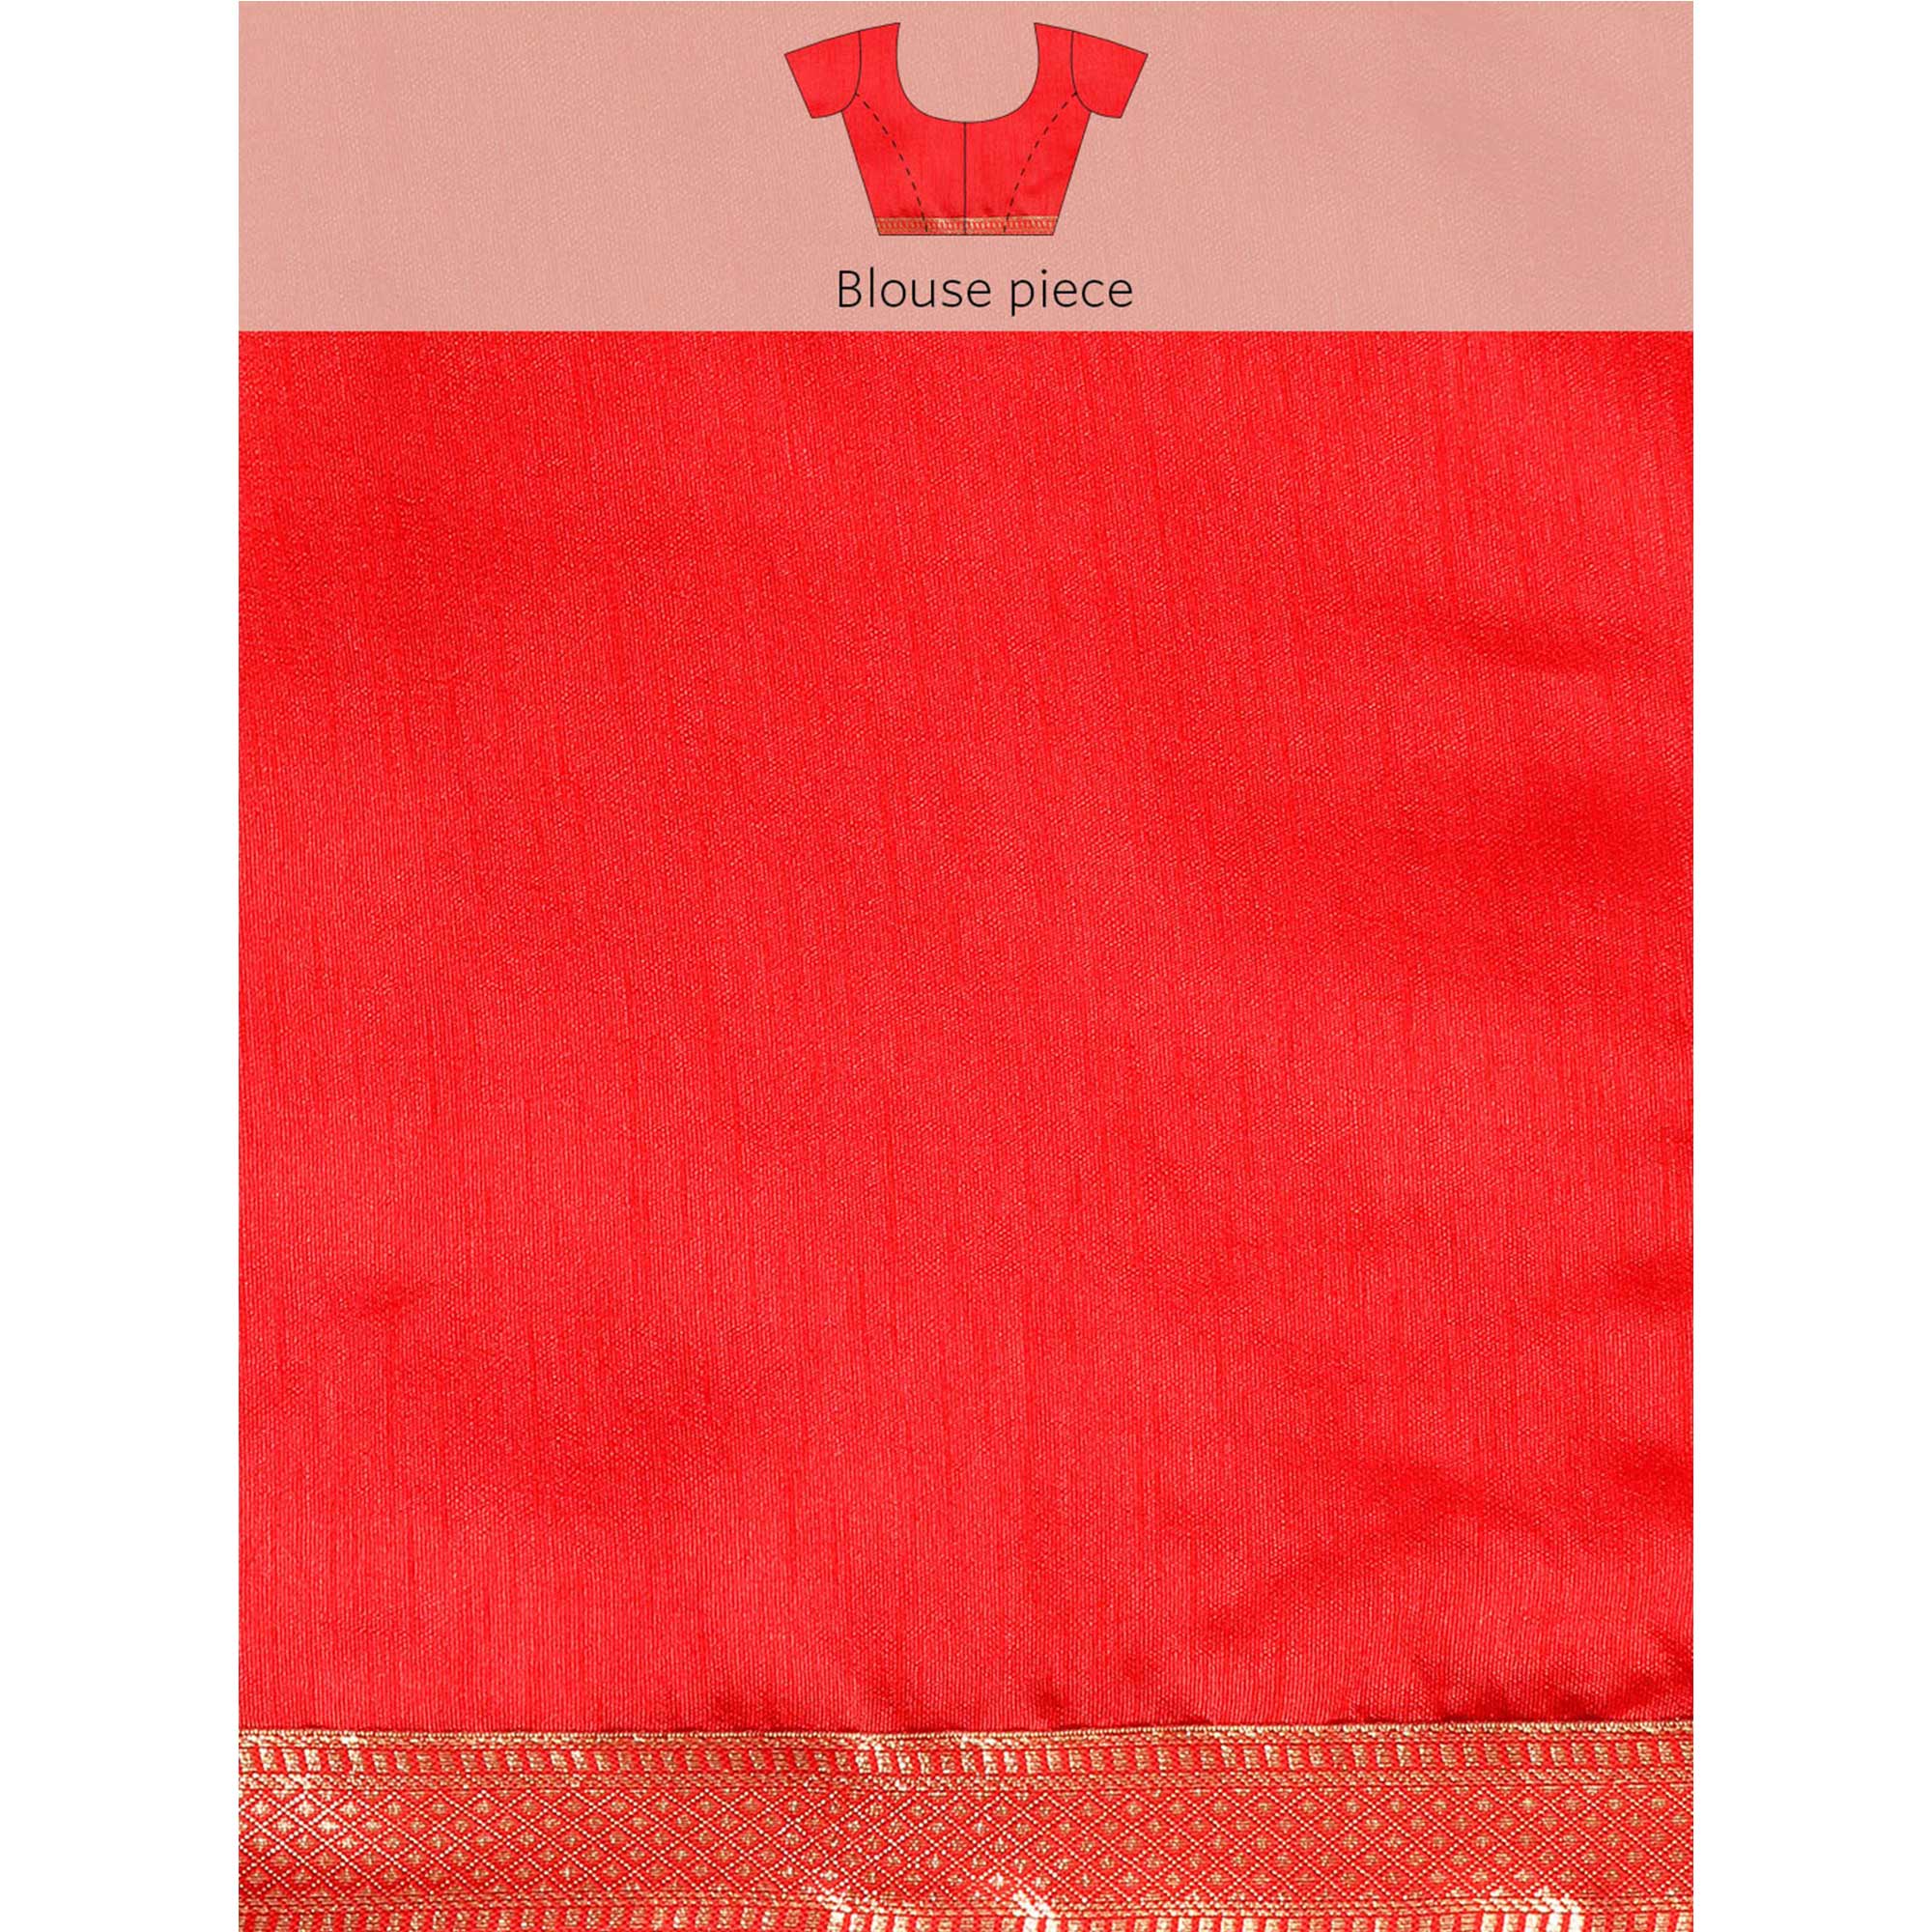 Red Solid Vichitra Silk Saree With Fancy Zari Border